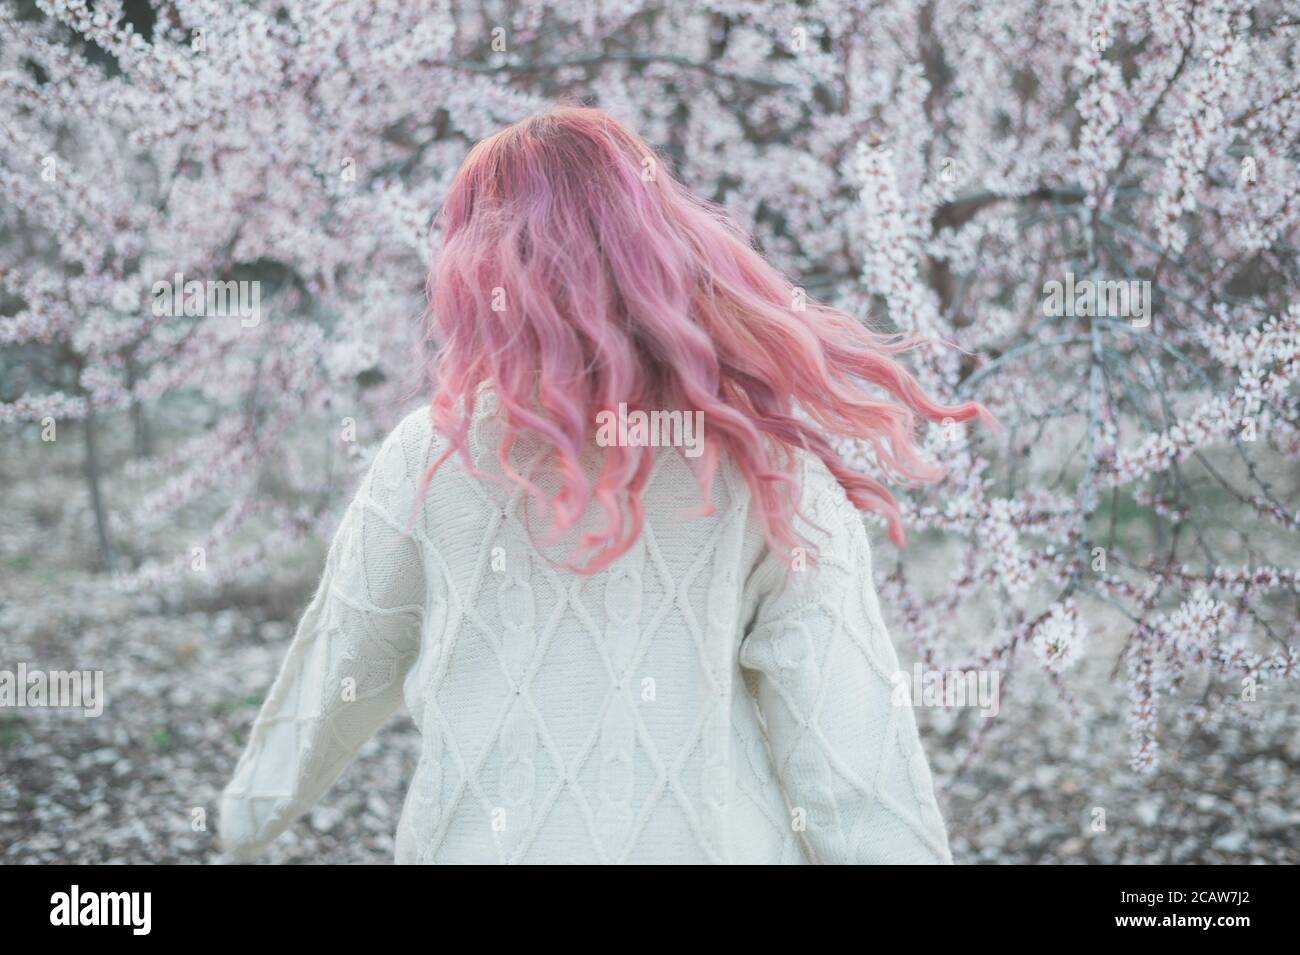 Pink hair female dancing spring blooming trees Stock Photo